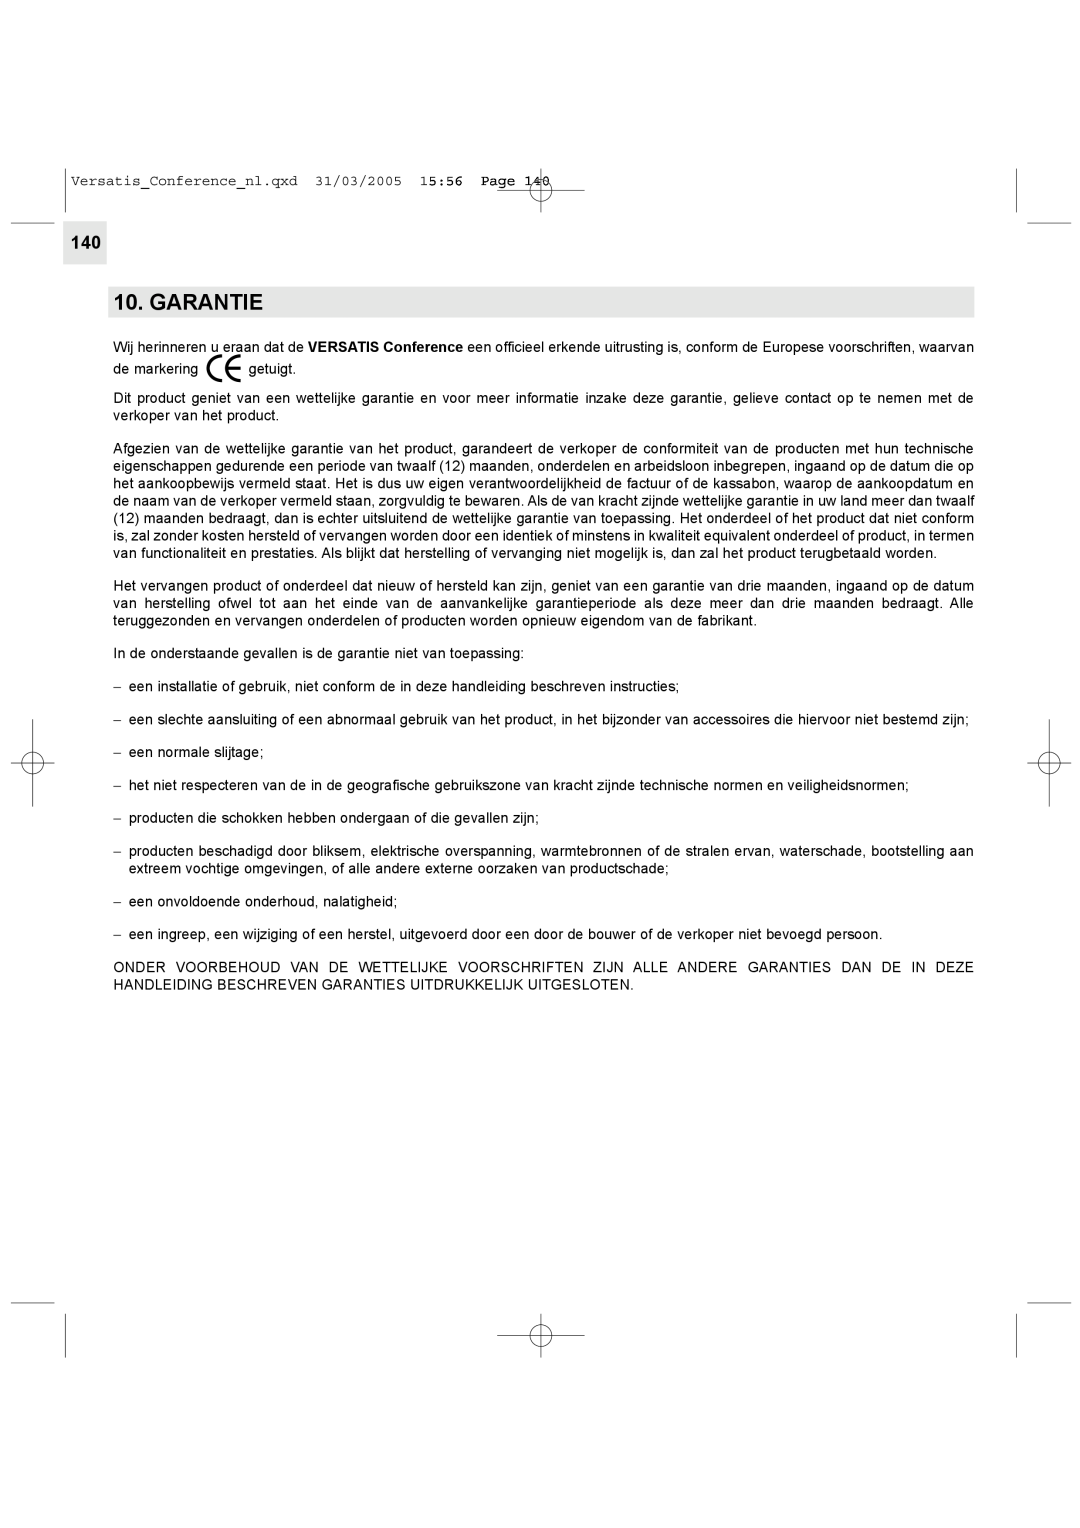 Alcatel Carrier Internetworking Solutions Conference Phone manual Garantie, de markering getuigt 